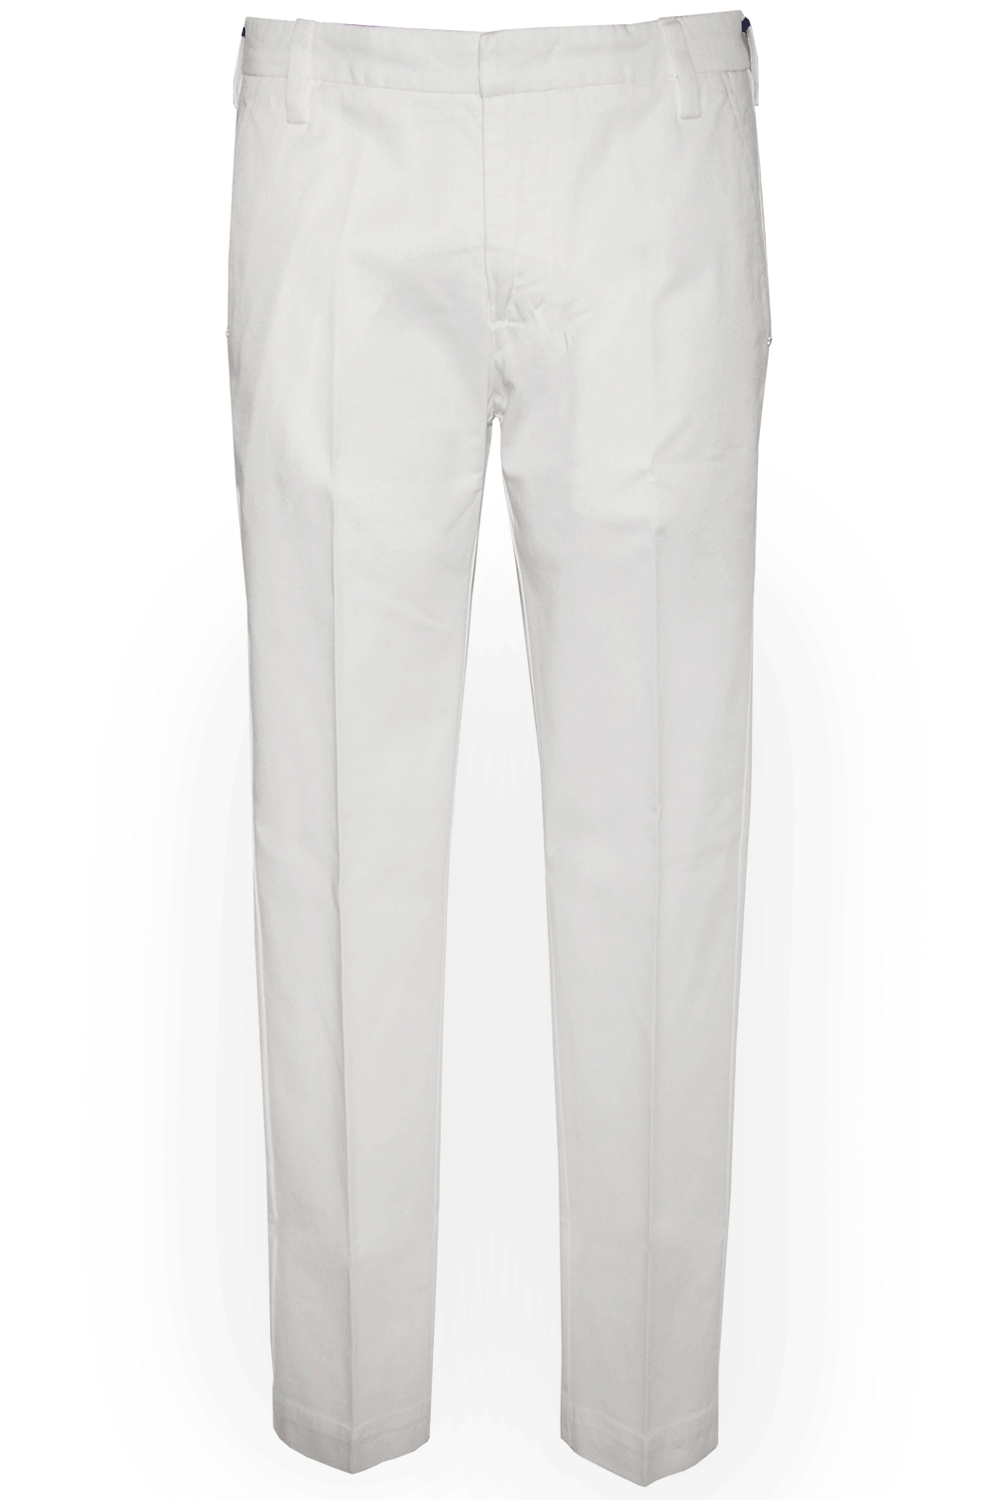 Pantalone bianco-ENTRE AMIS Pantaloni ENTRE AMIS   